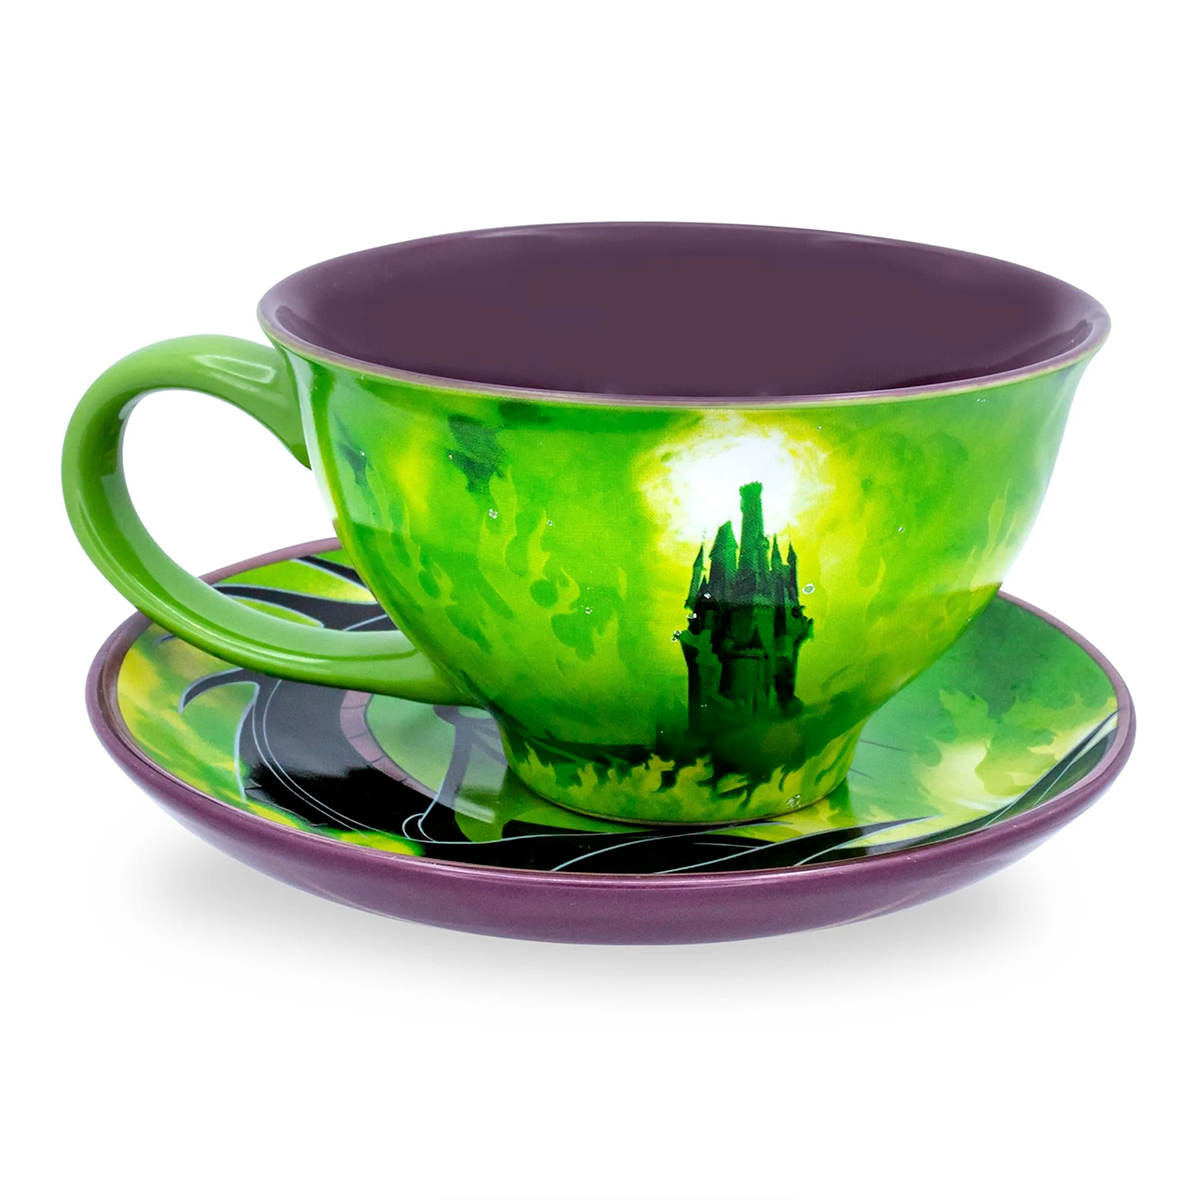 Maleficent Disney Villains Ceramic Teacup and Saucer Set